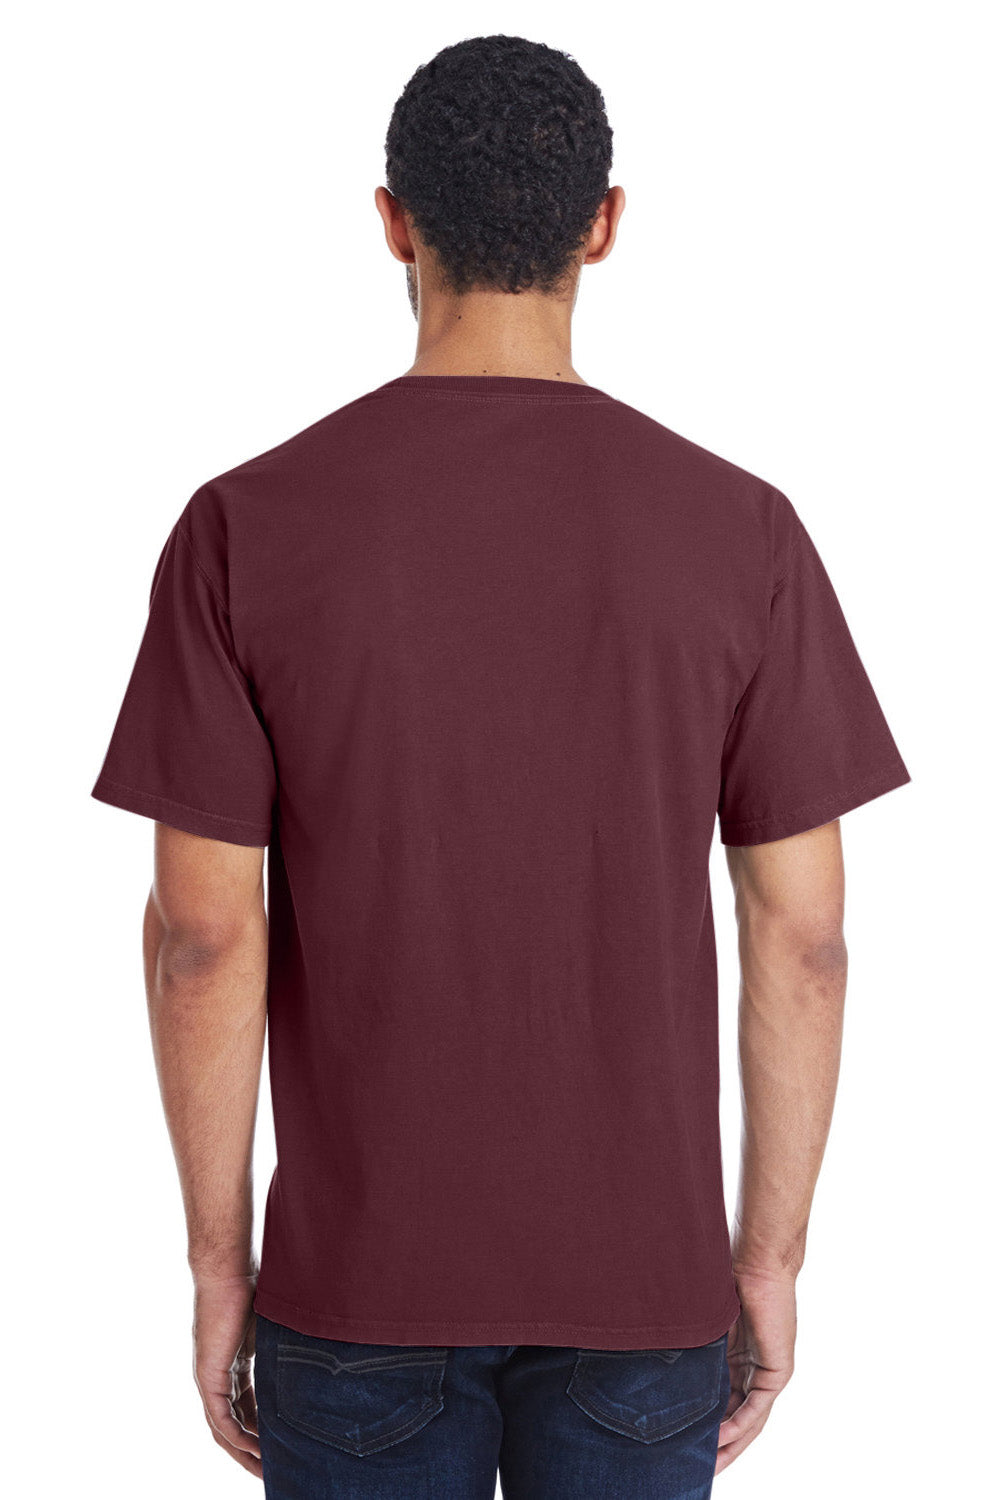 ComfortWash by Hanes GDH100 Mens Short Sleeve Crewneck T-Shirt Maroon Back